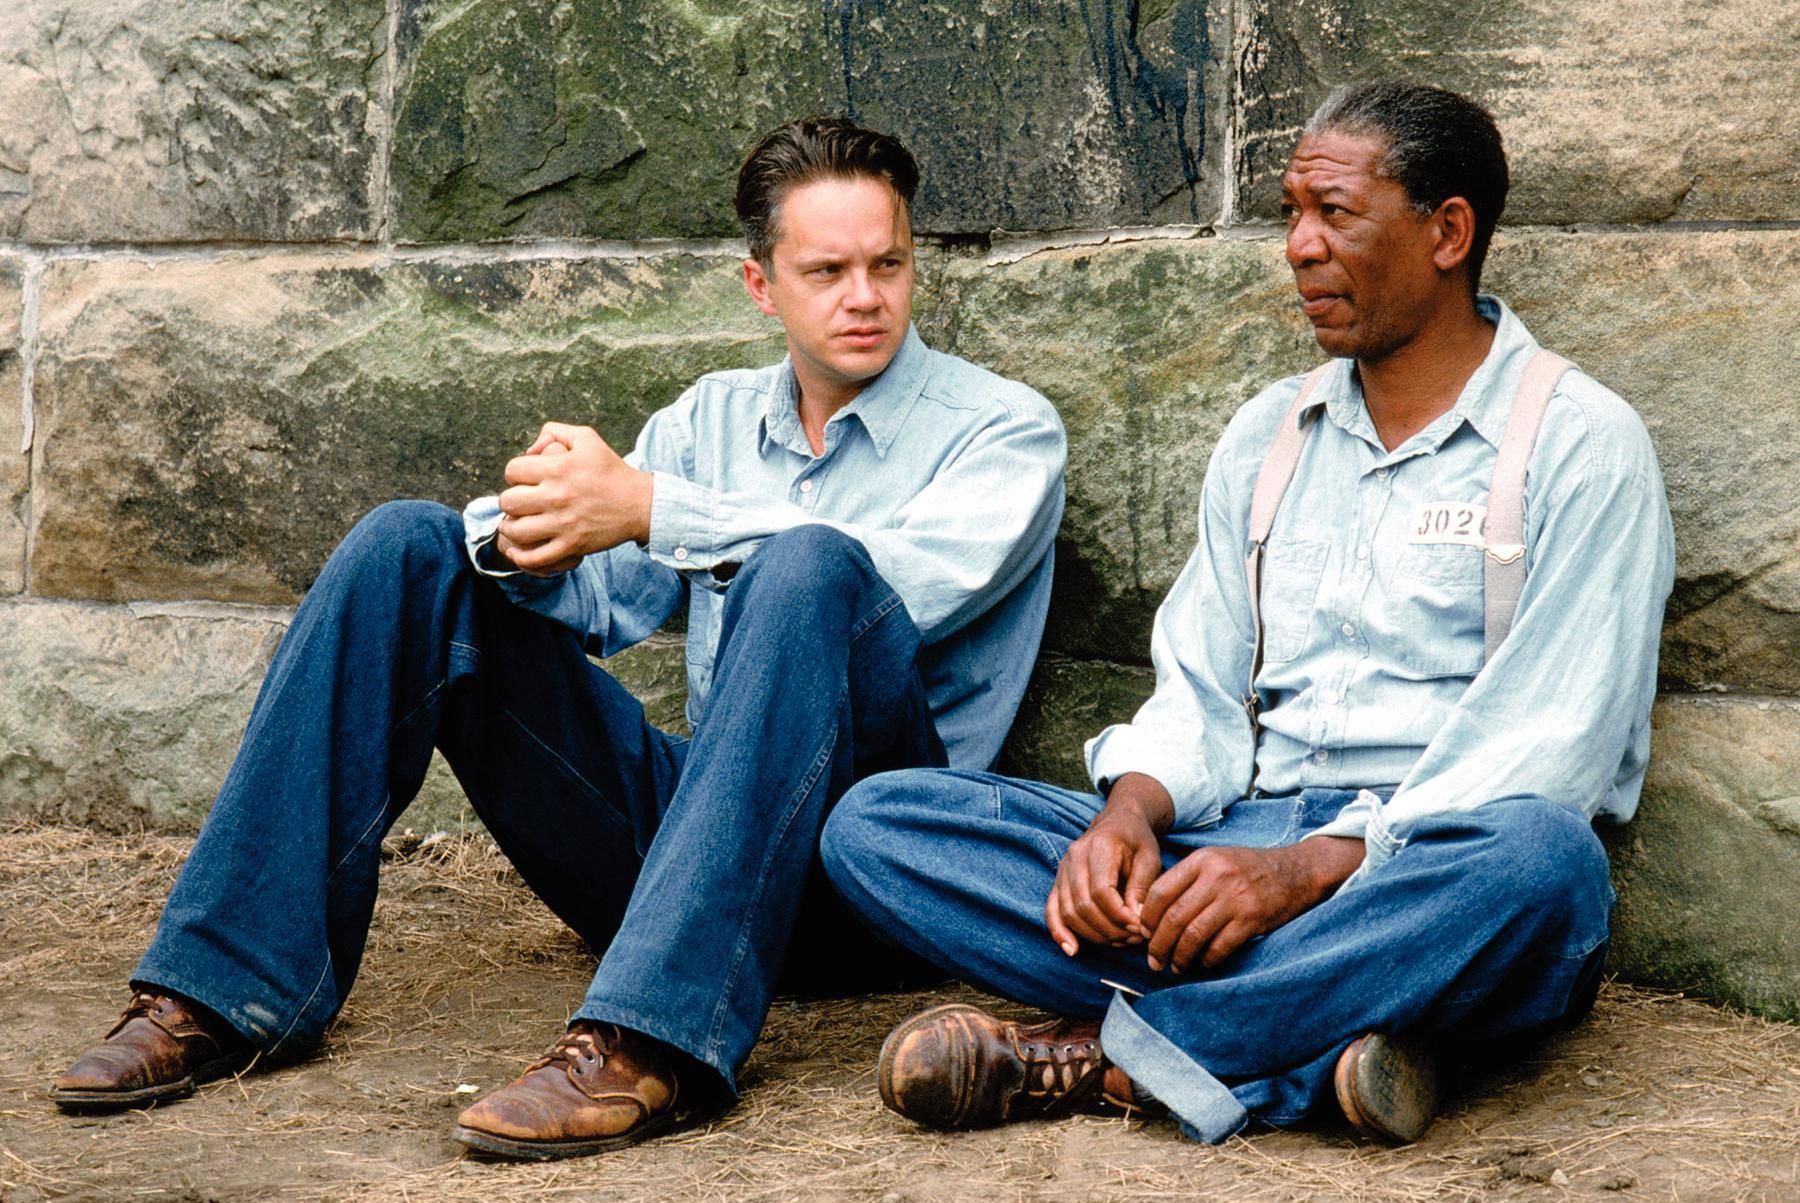 Tim Robbins and Morgan Freeman in "The Shawshank Redemption."